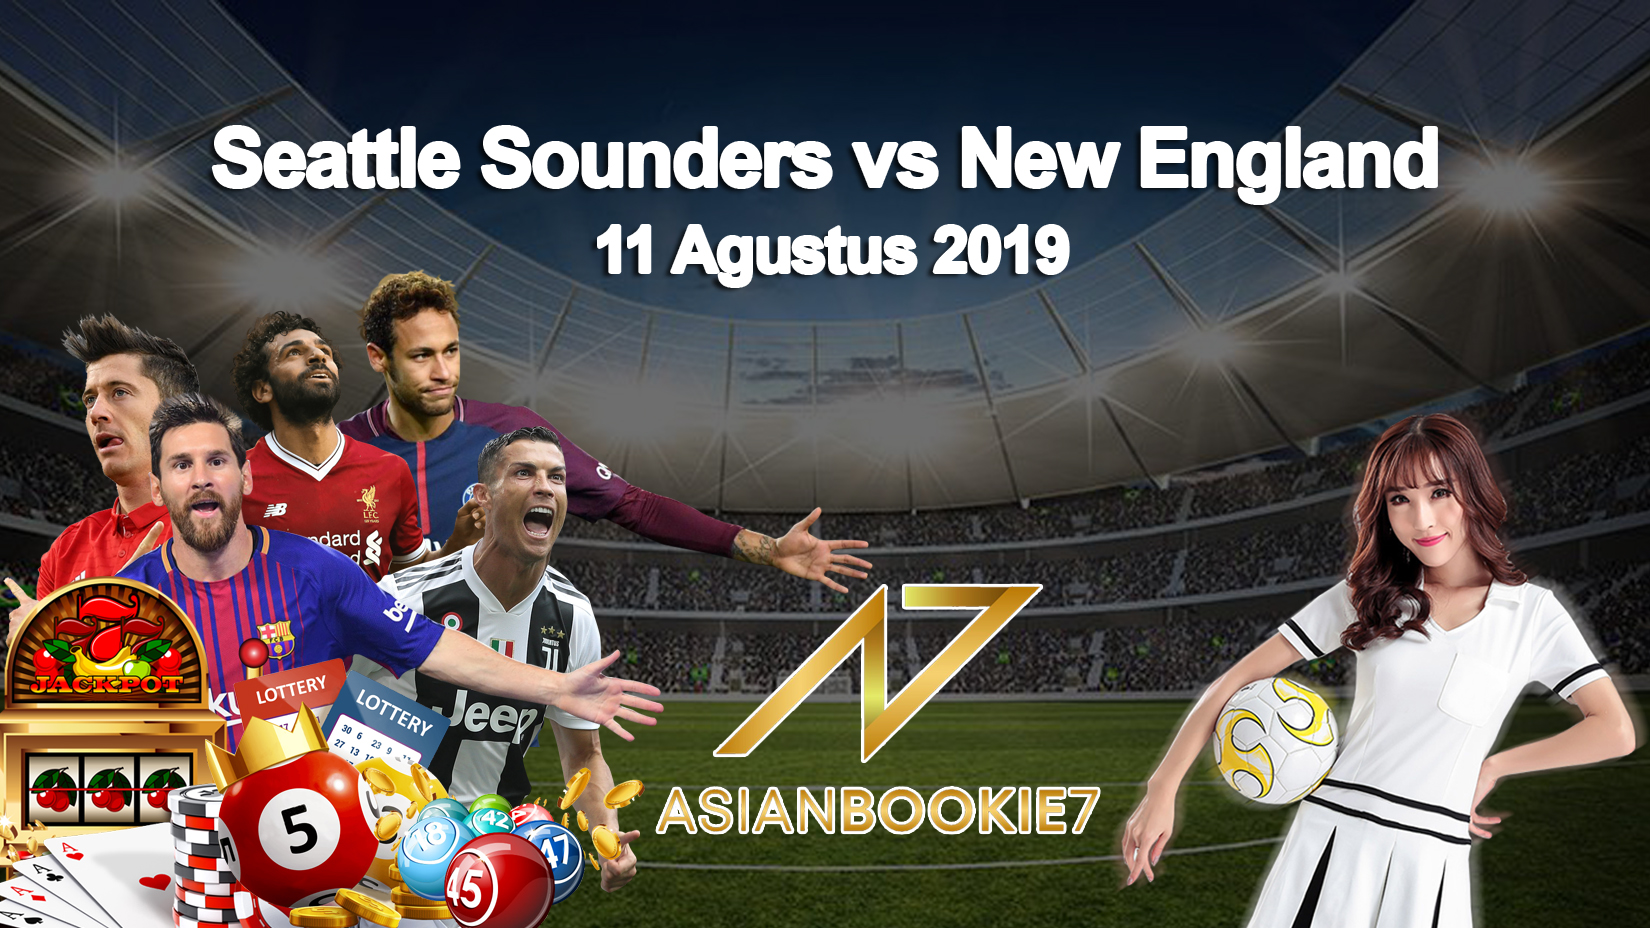 Prediksi Seattle Sounders vs New England 11 Agustus 2019